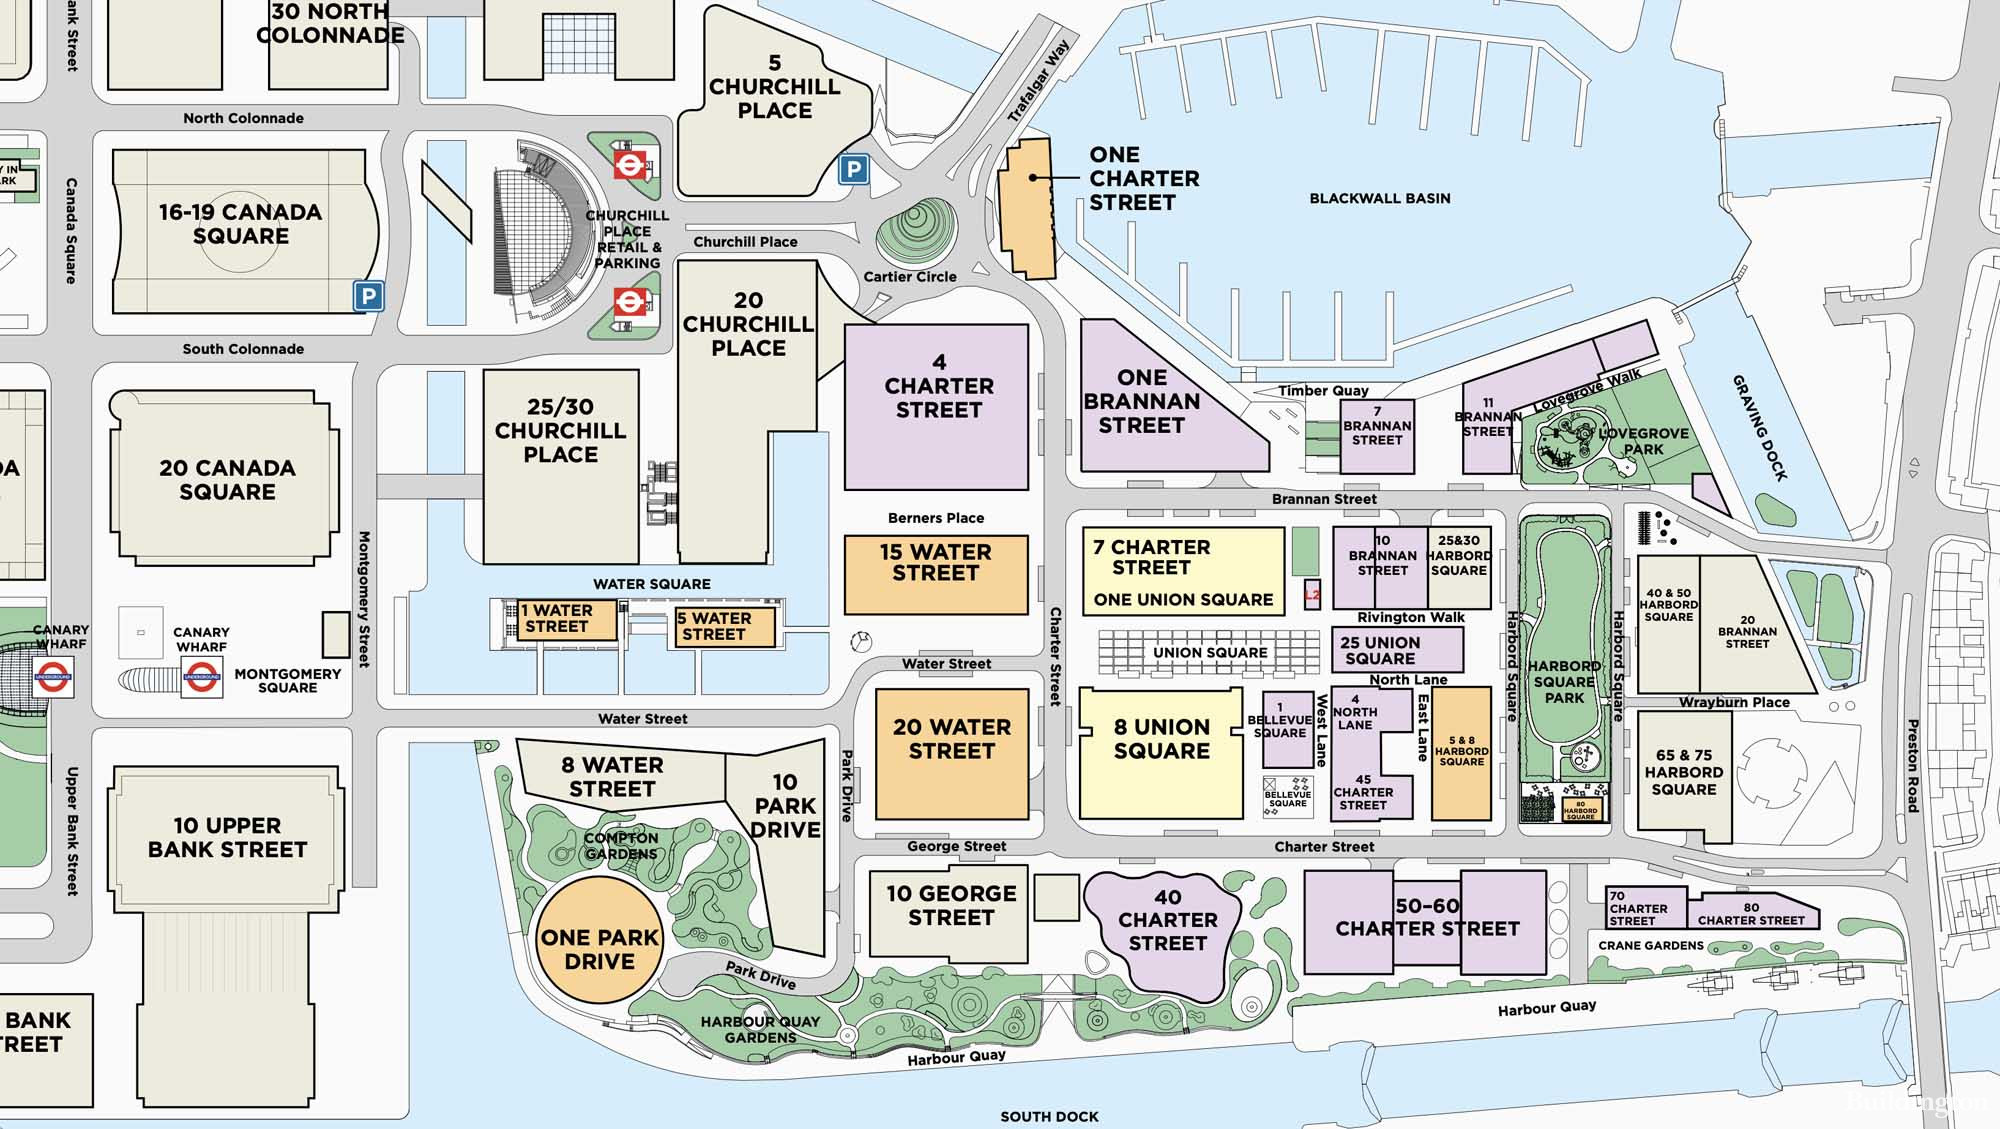 Wood Wharf site plan/masterplan/site map in 2021.